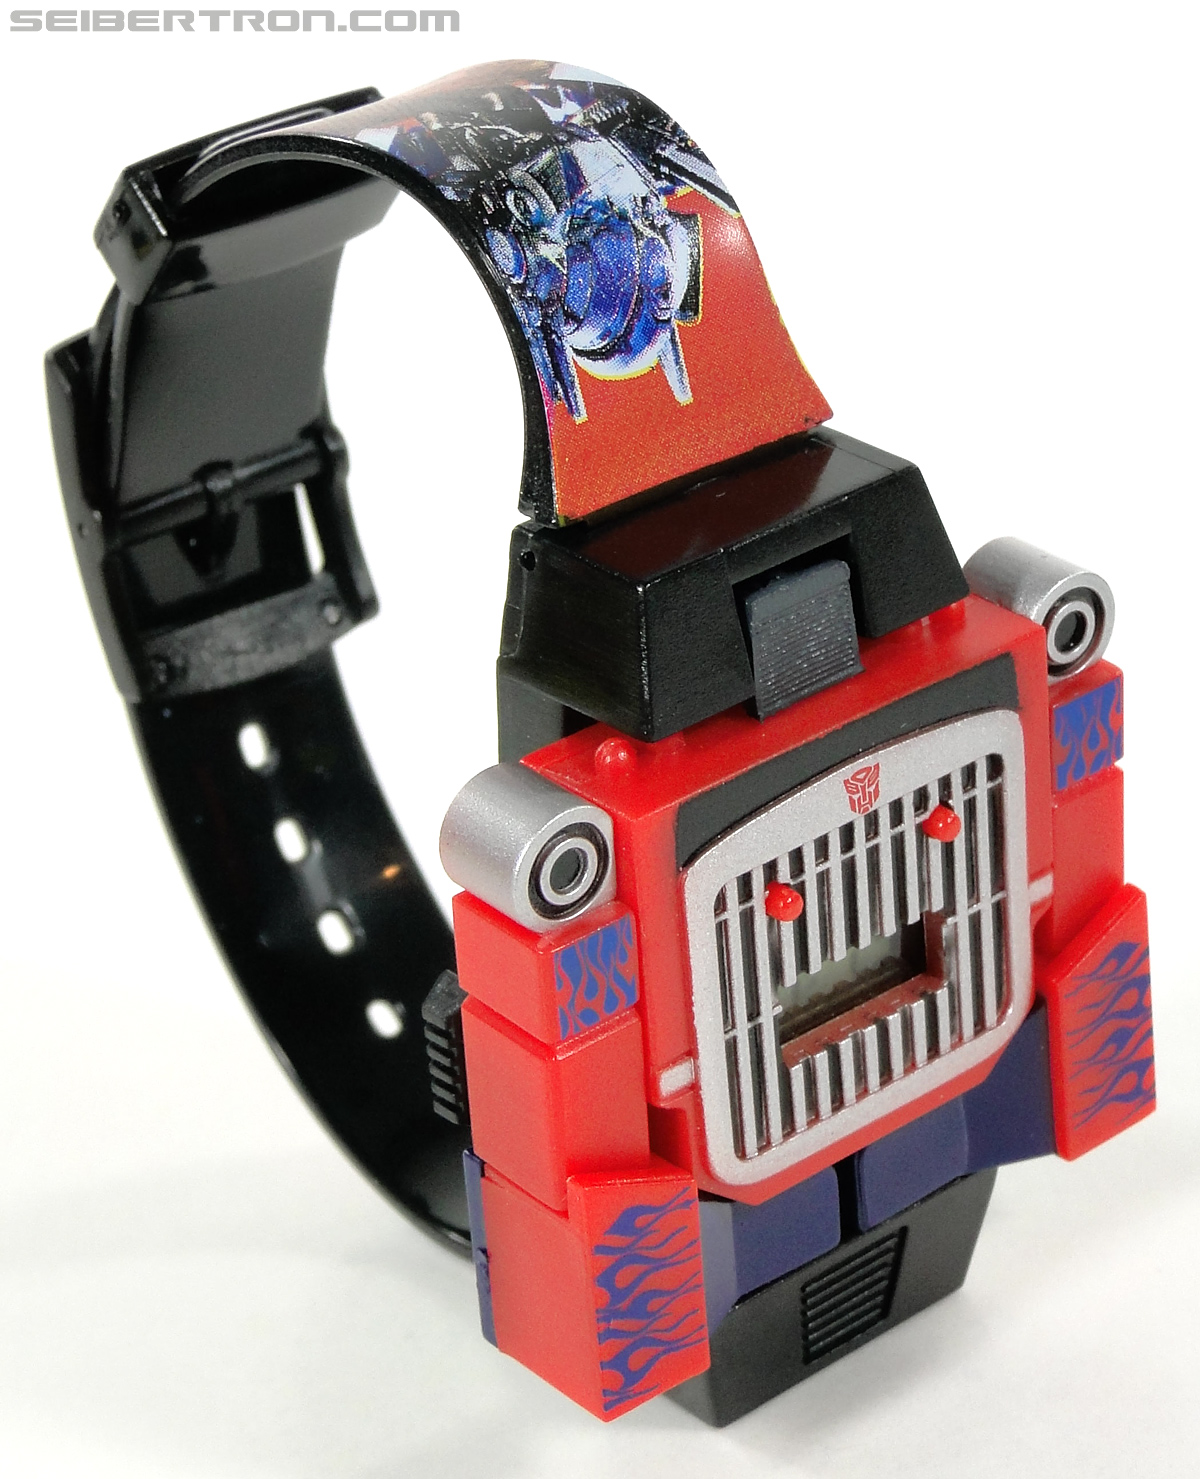 Transformer watch. Электронные часы трансформер. Смарт часы Transformers. Часы наручные трансформеры. Трансформеры Robot watch sale in.